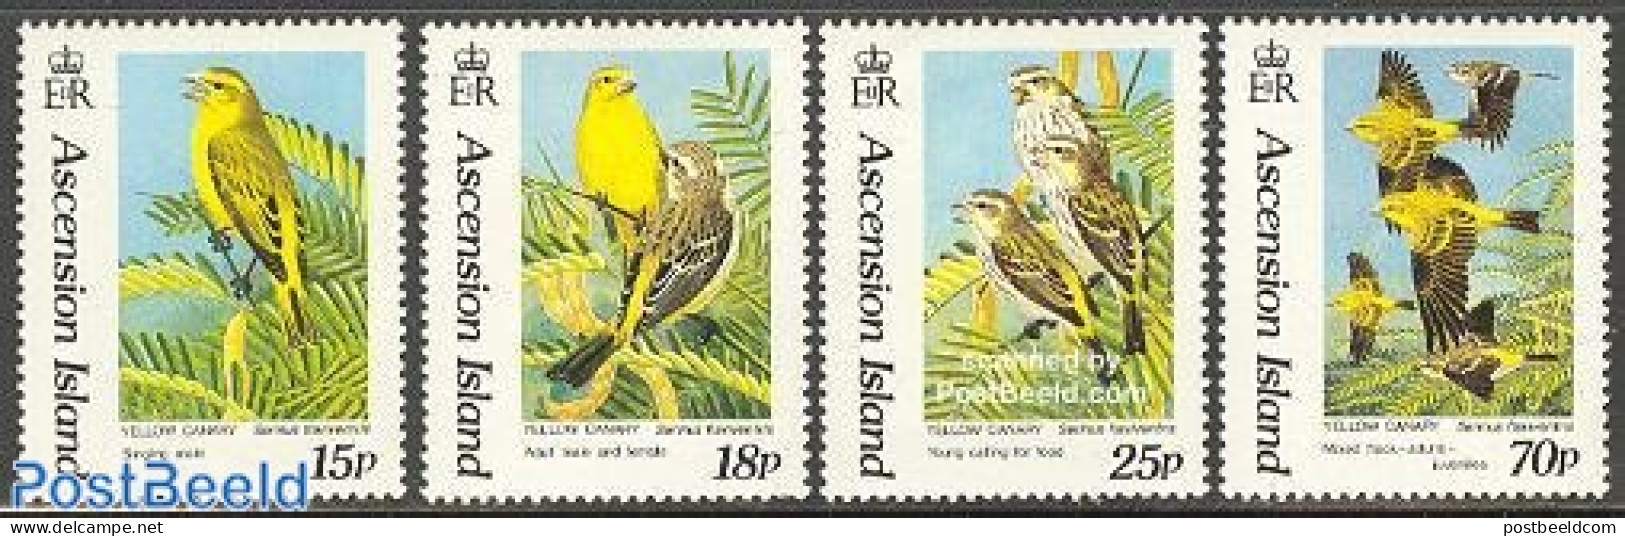 Ascension 1993 Yellow Canary 4v, Mint NH, Nature - Birds - Ascension (Ile De L')